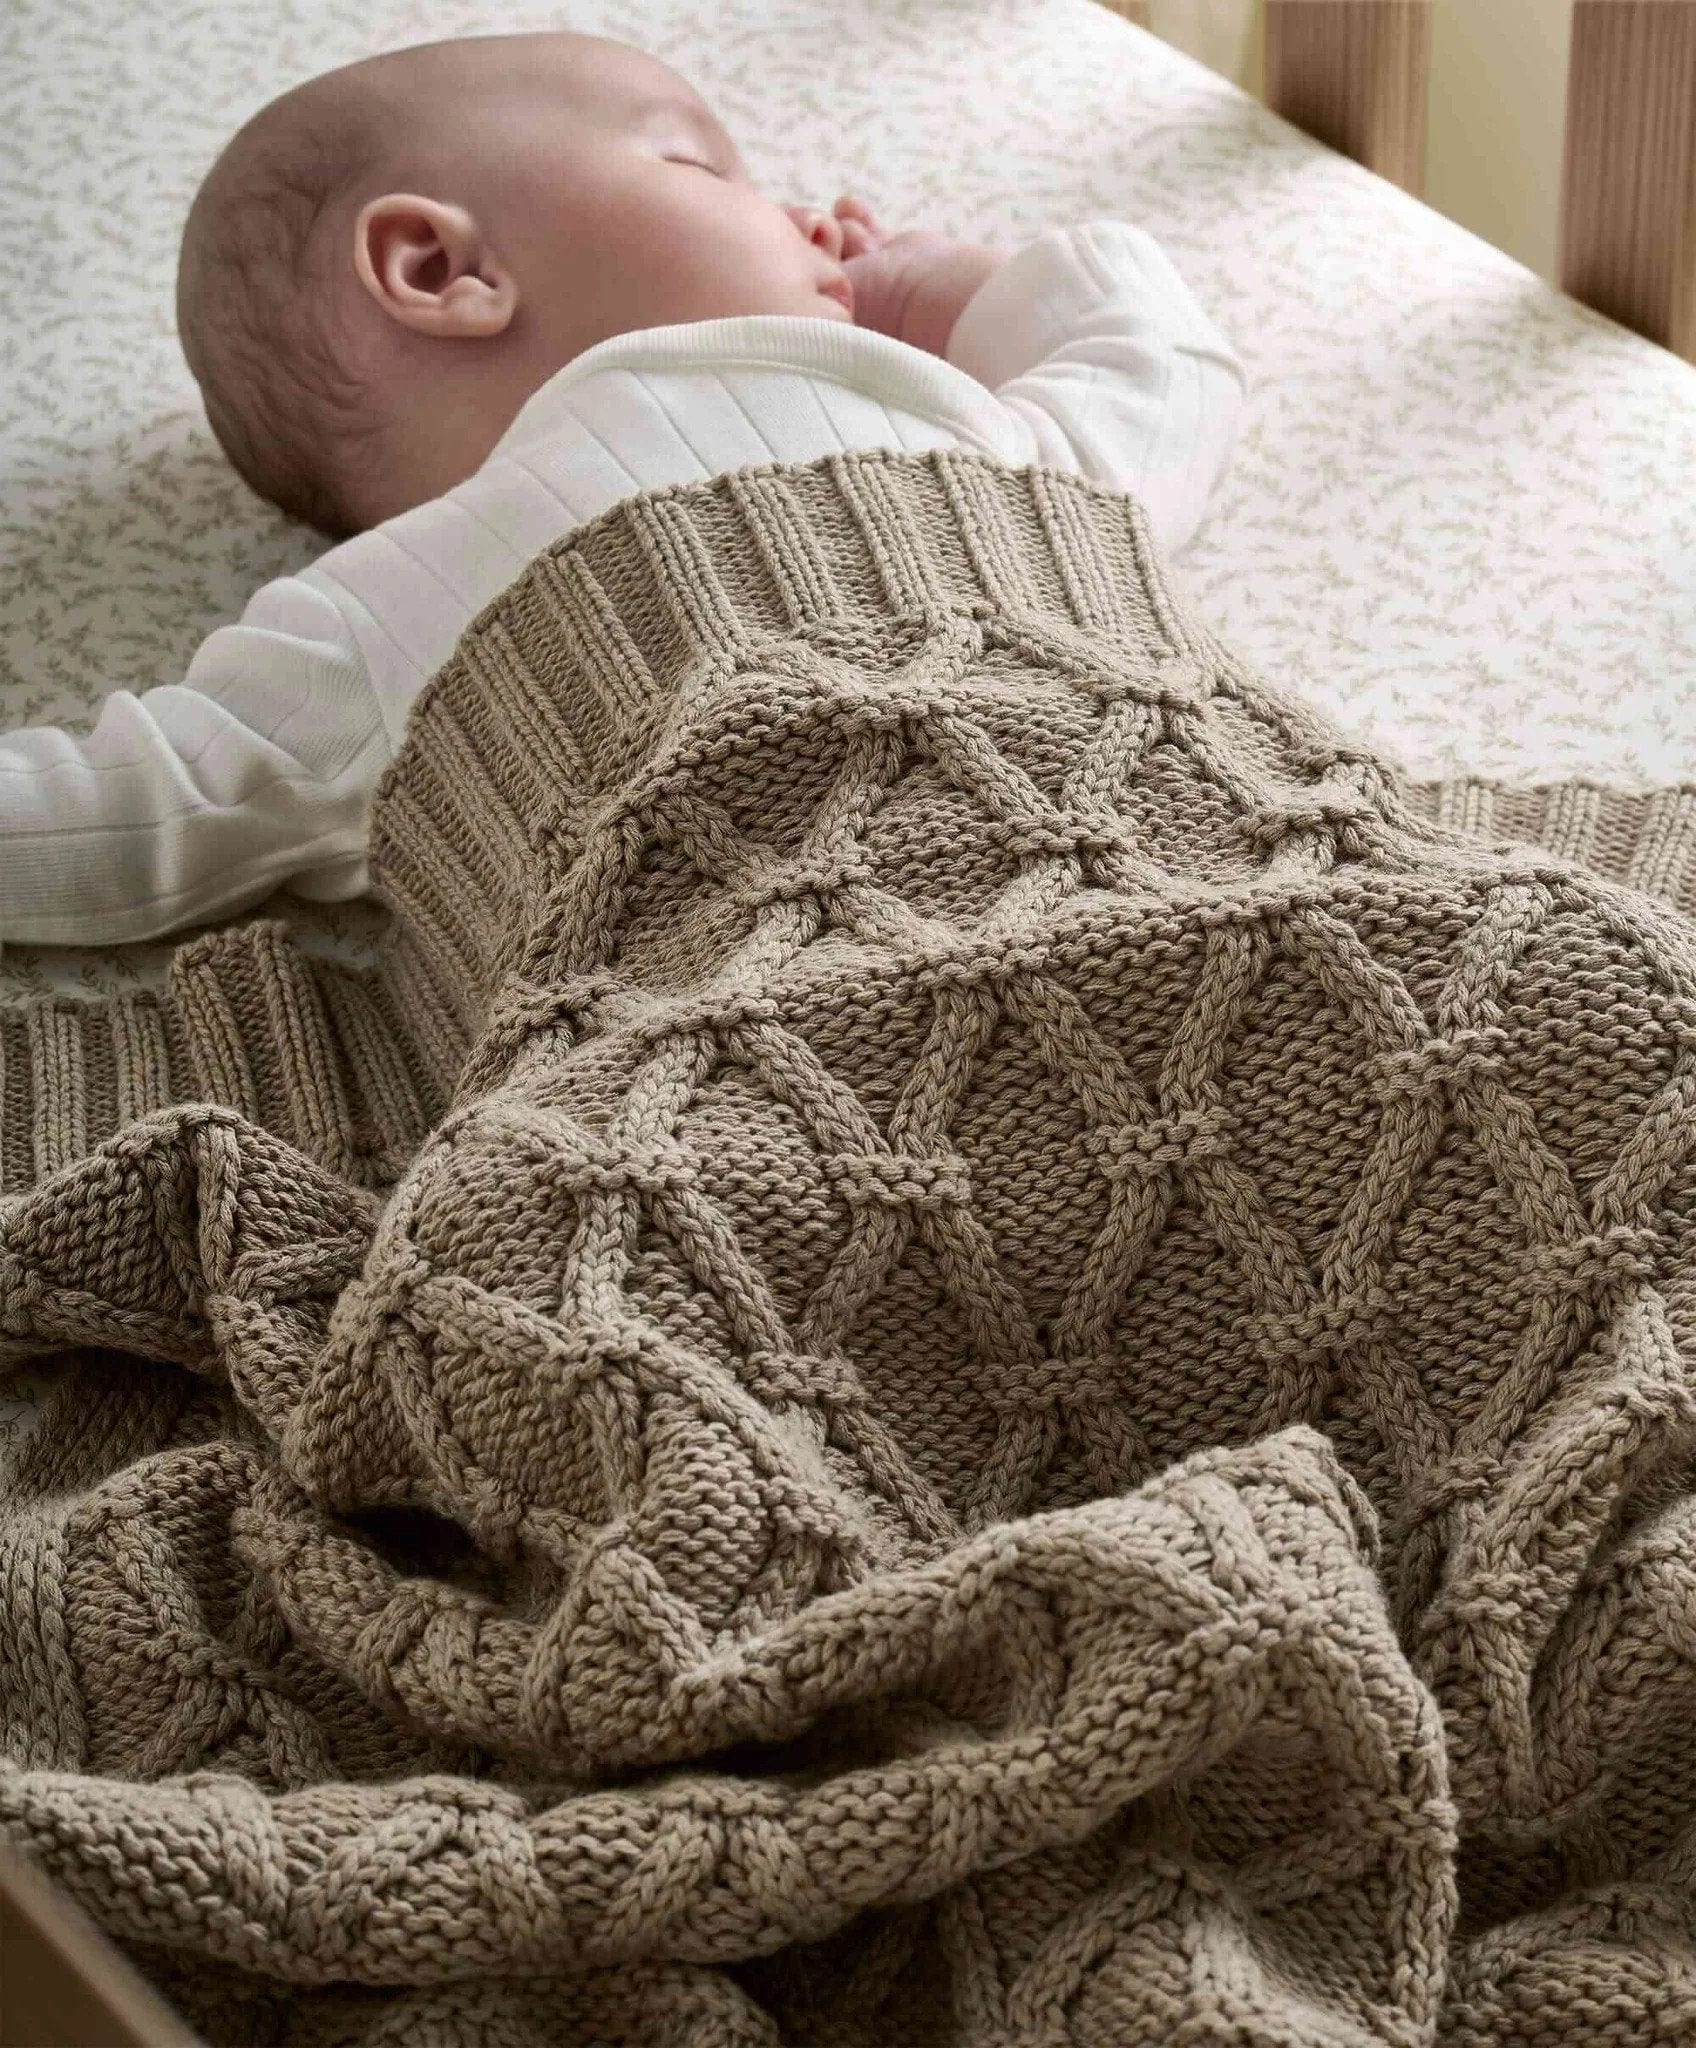 Mamas & Papas Knitted Pram Blanket in Diamond Mocha Cot & Cot Bed Blankets 7883U2300